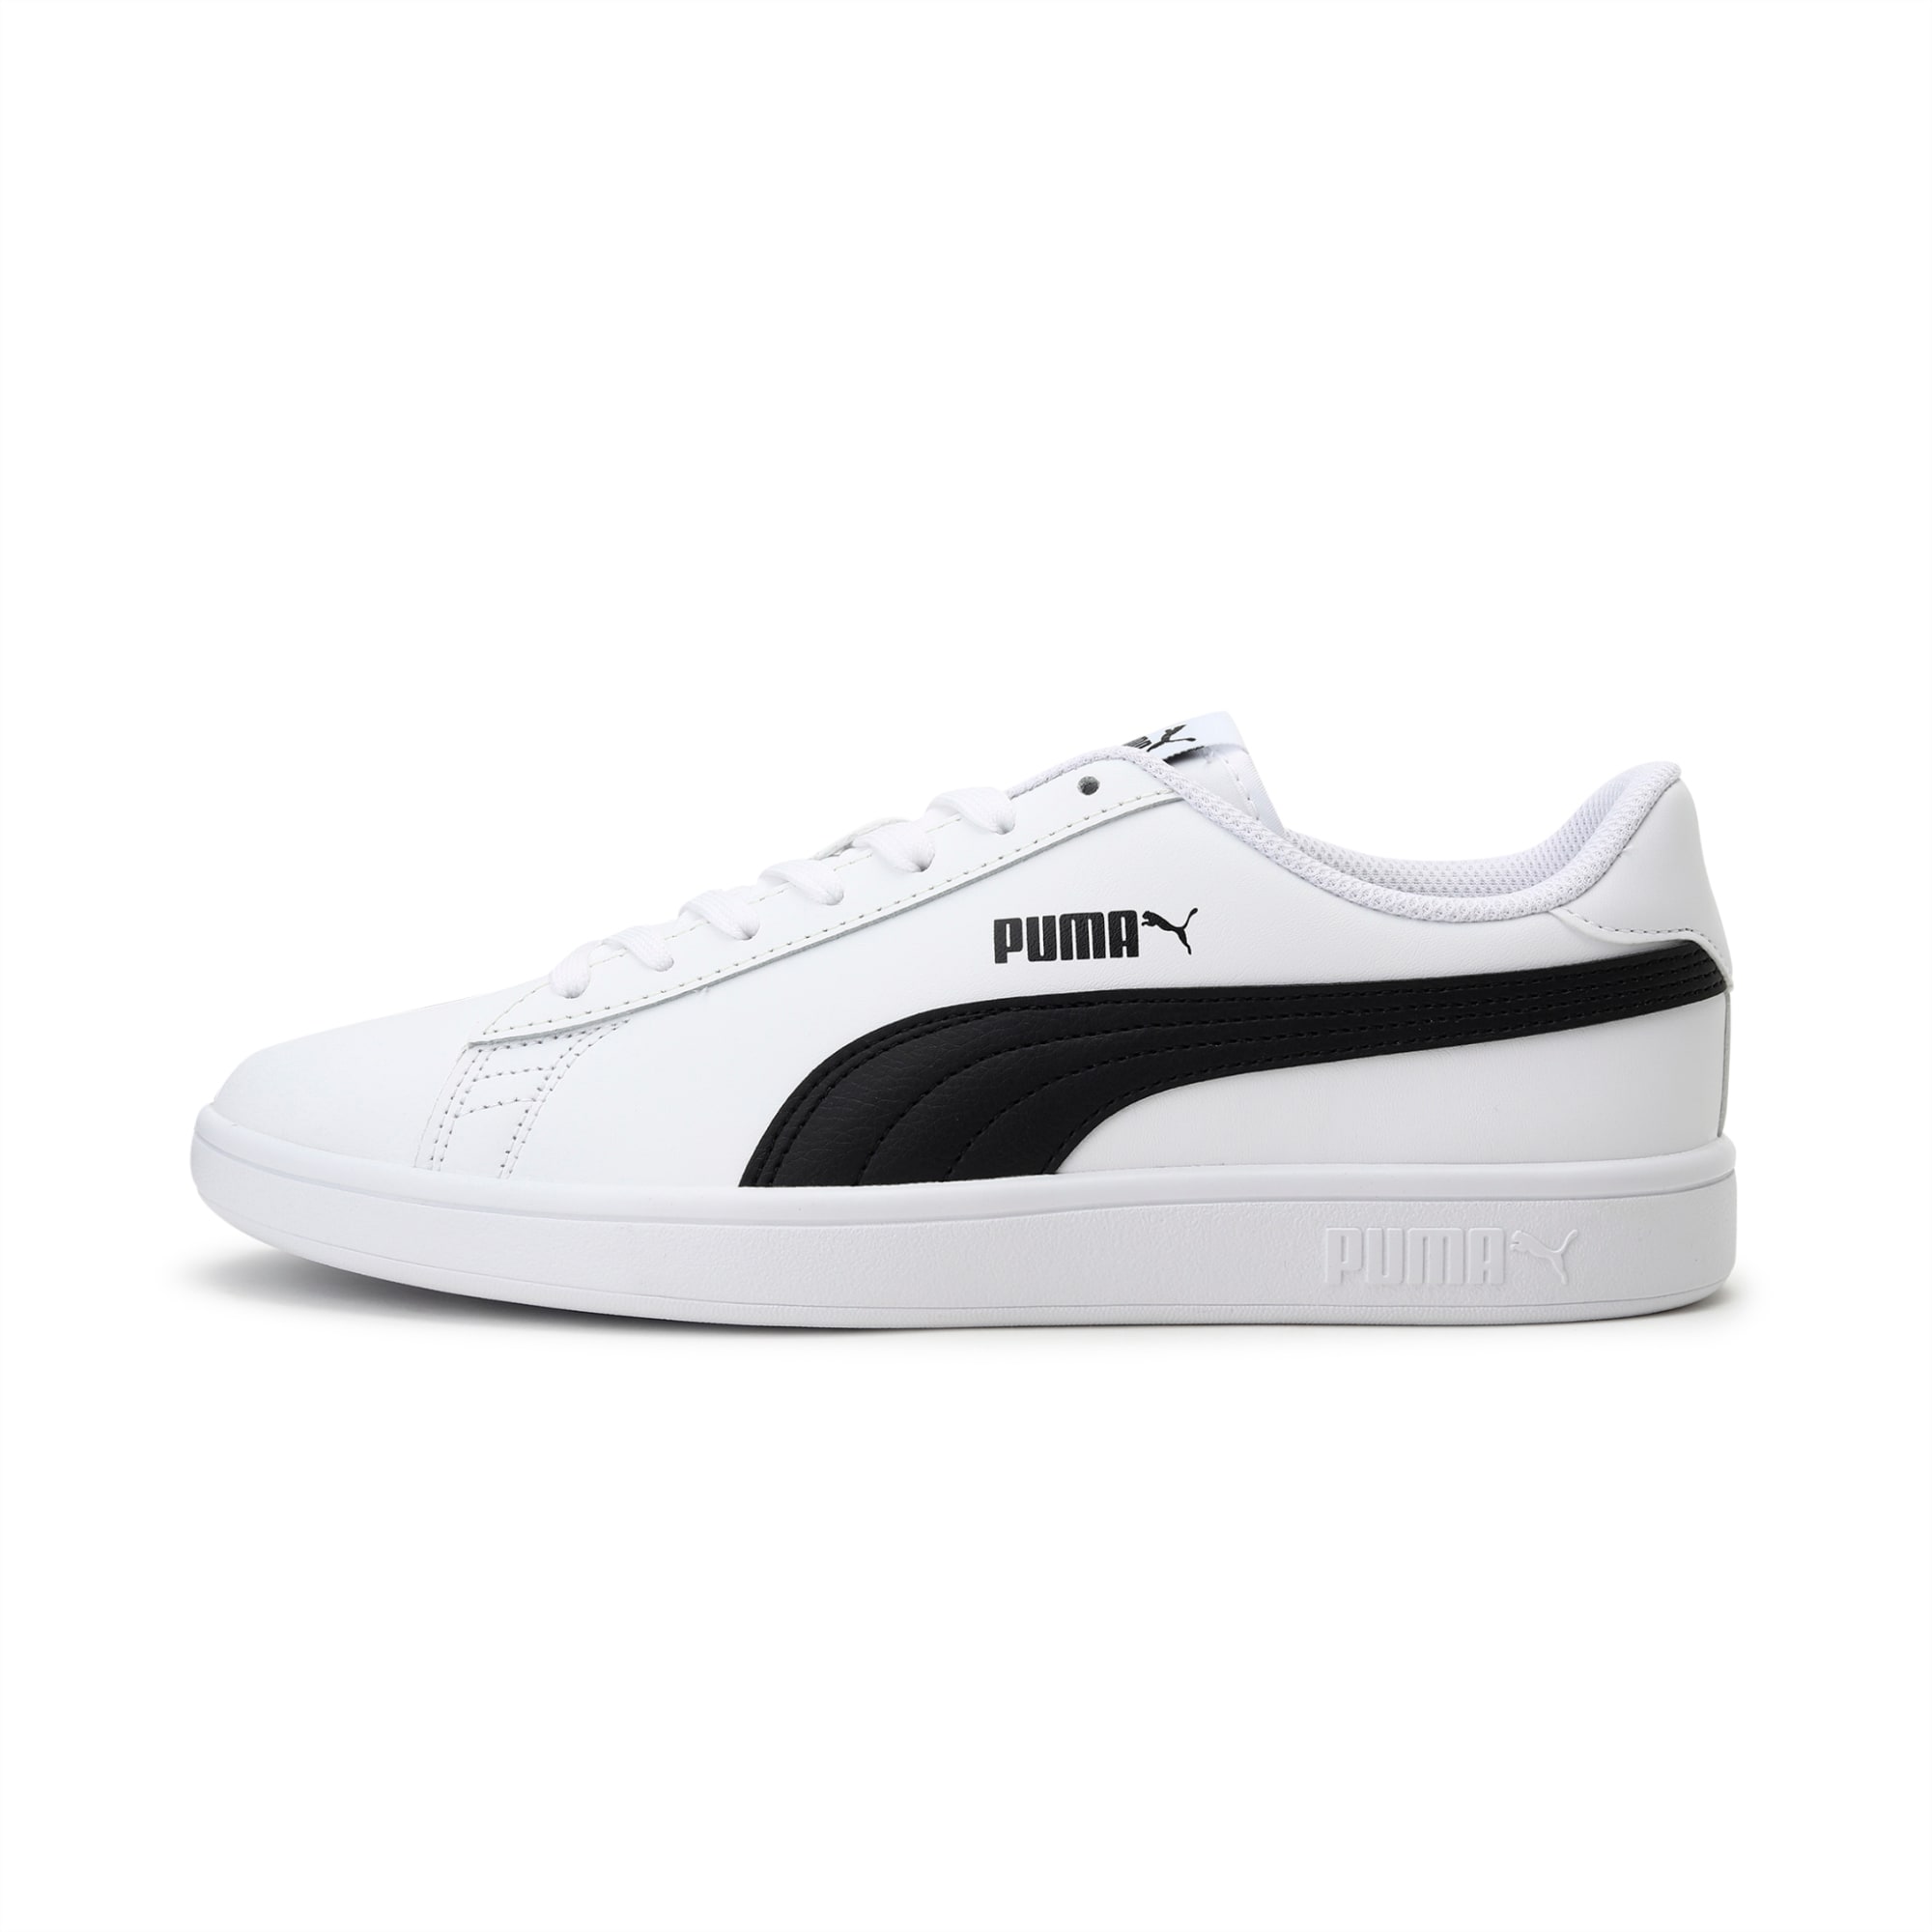 puma new white sneakers